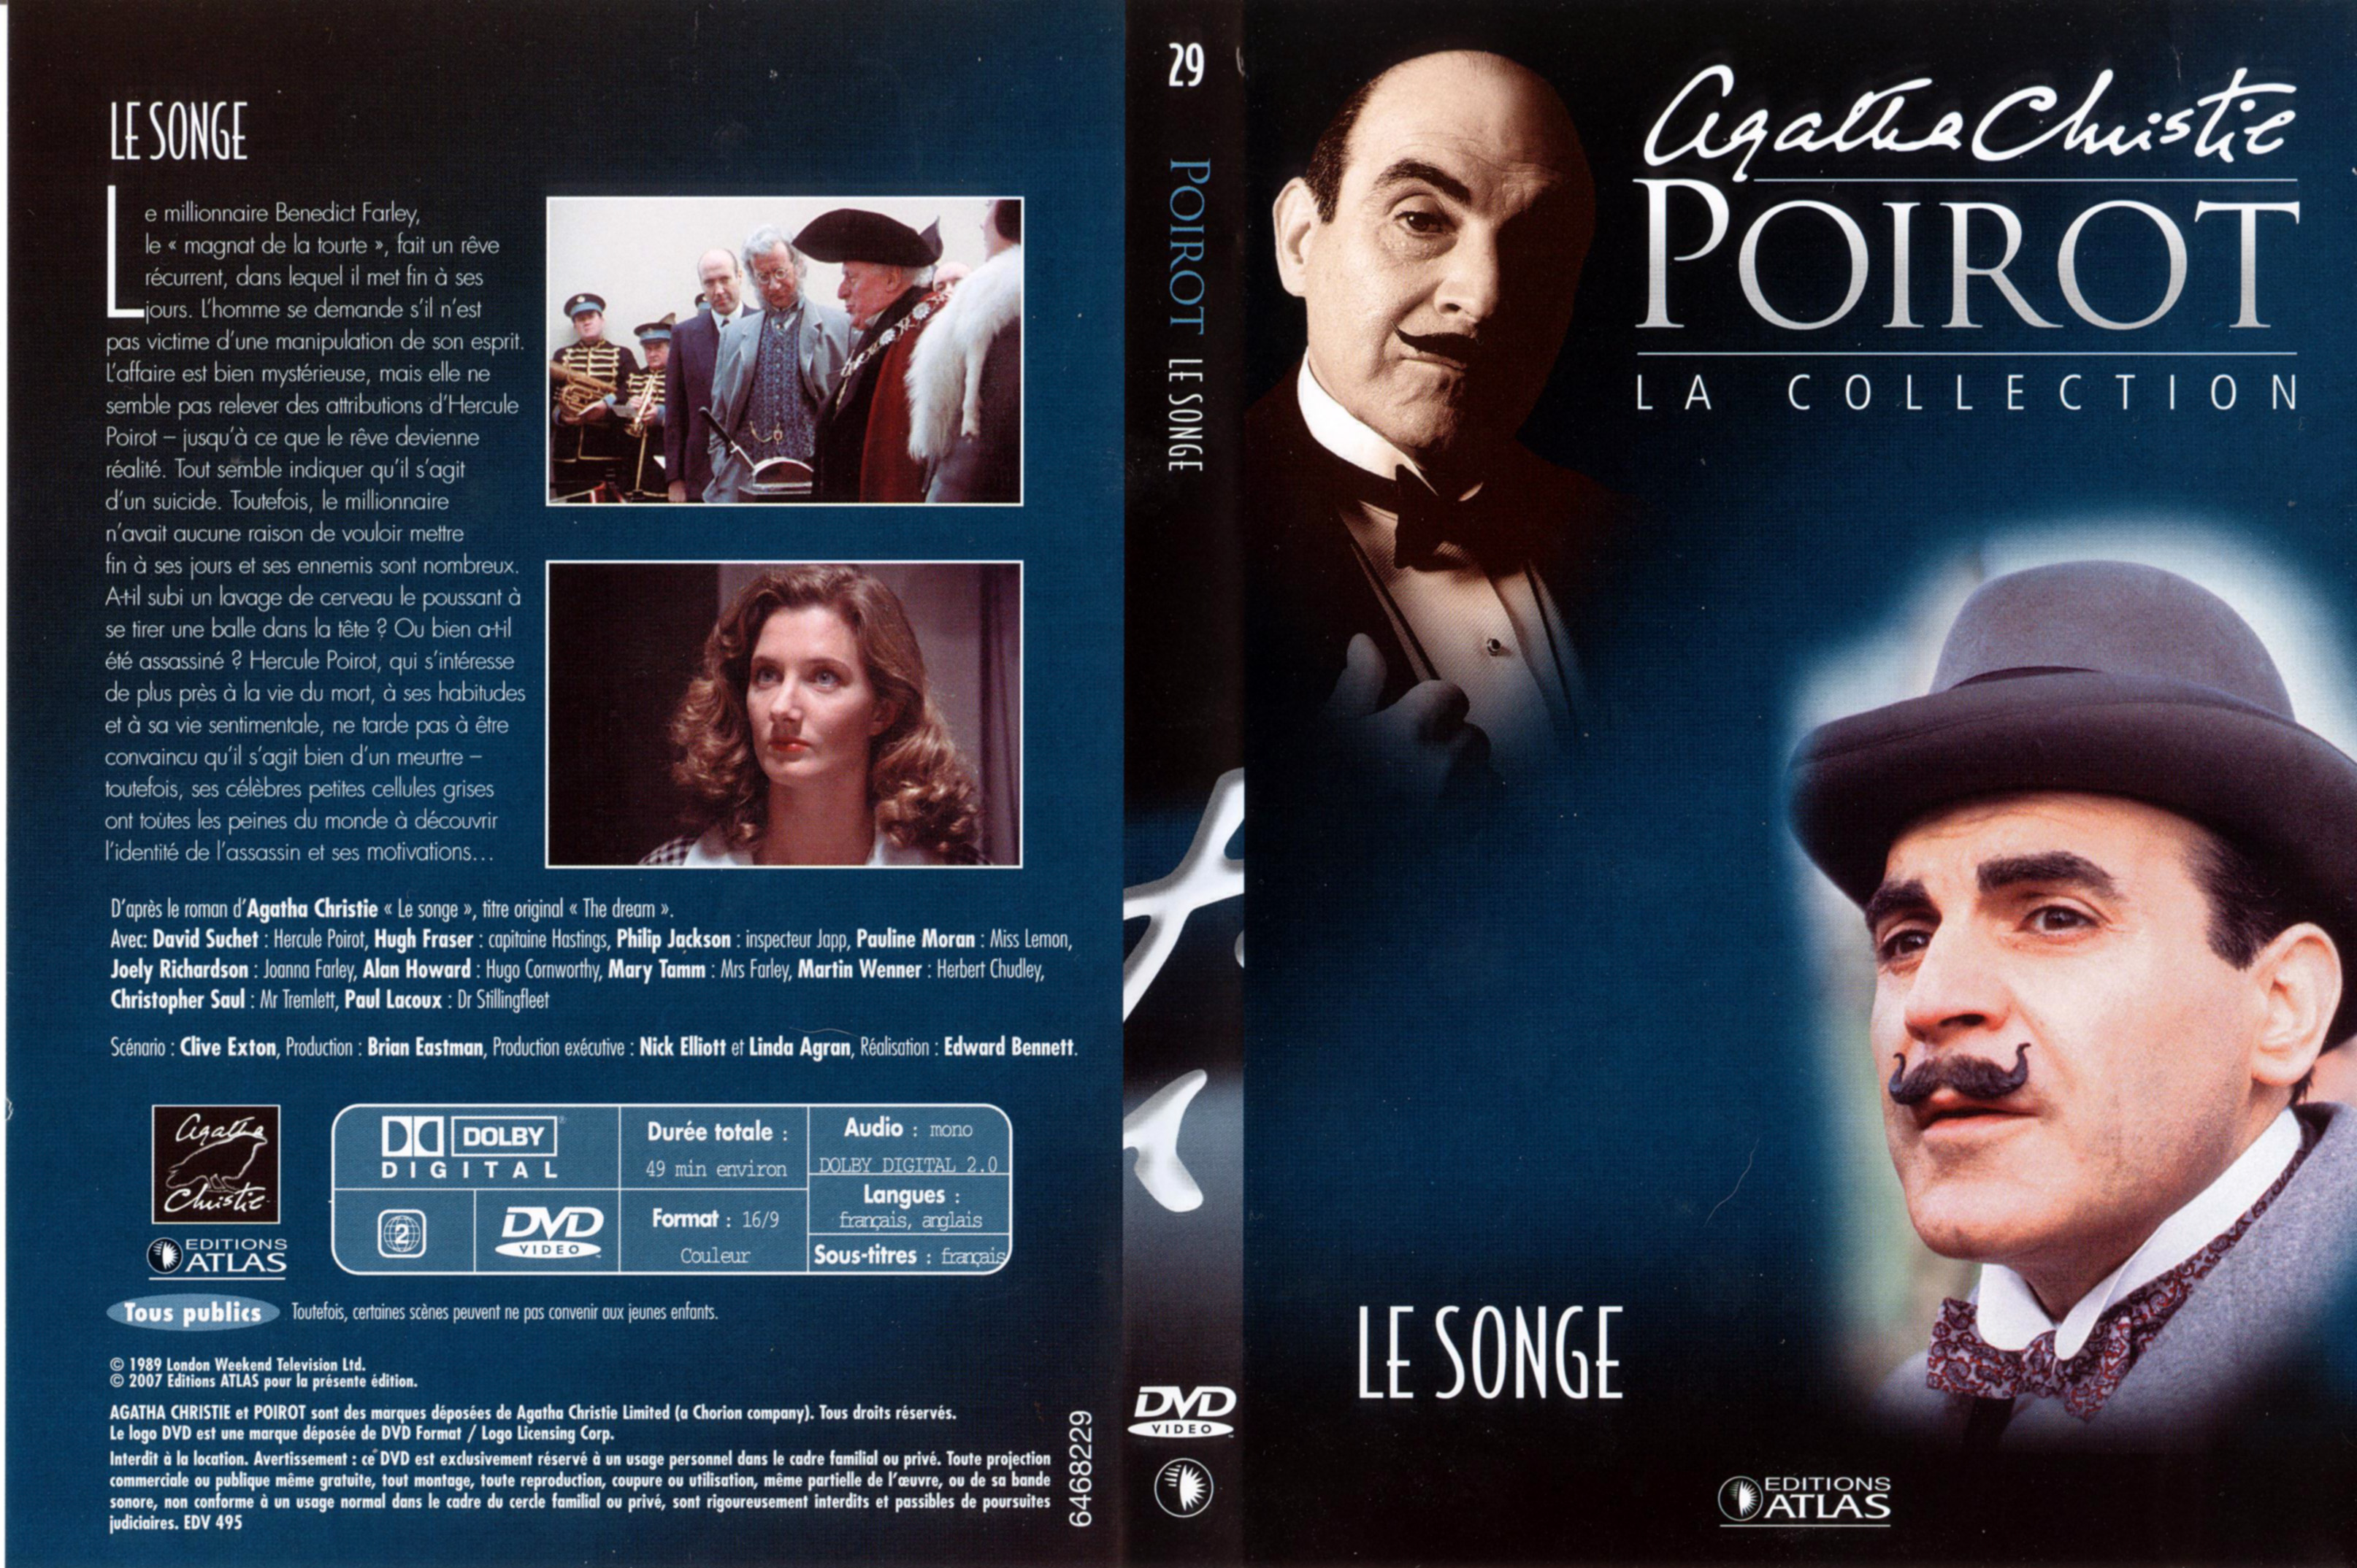 Jaquette DVD Hercule Poirot vol 29